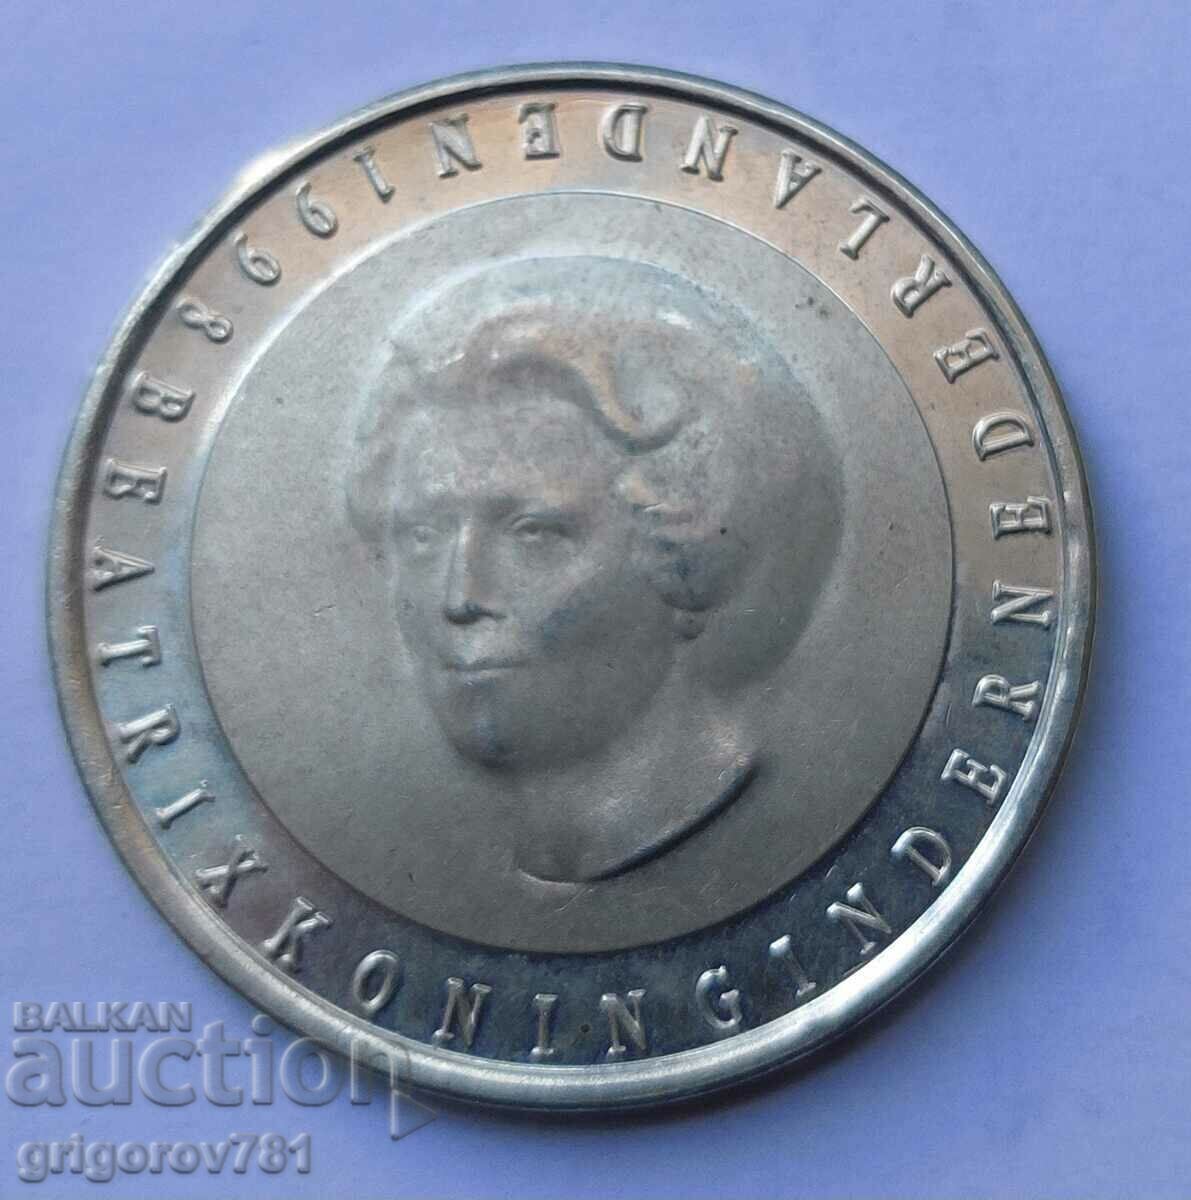 50 Guilder Silver Netherlands 1998 - Silver Coin #11